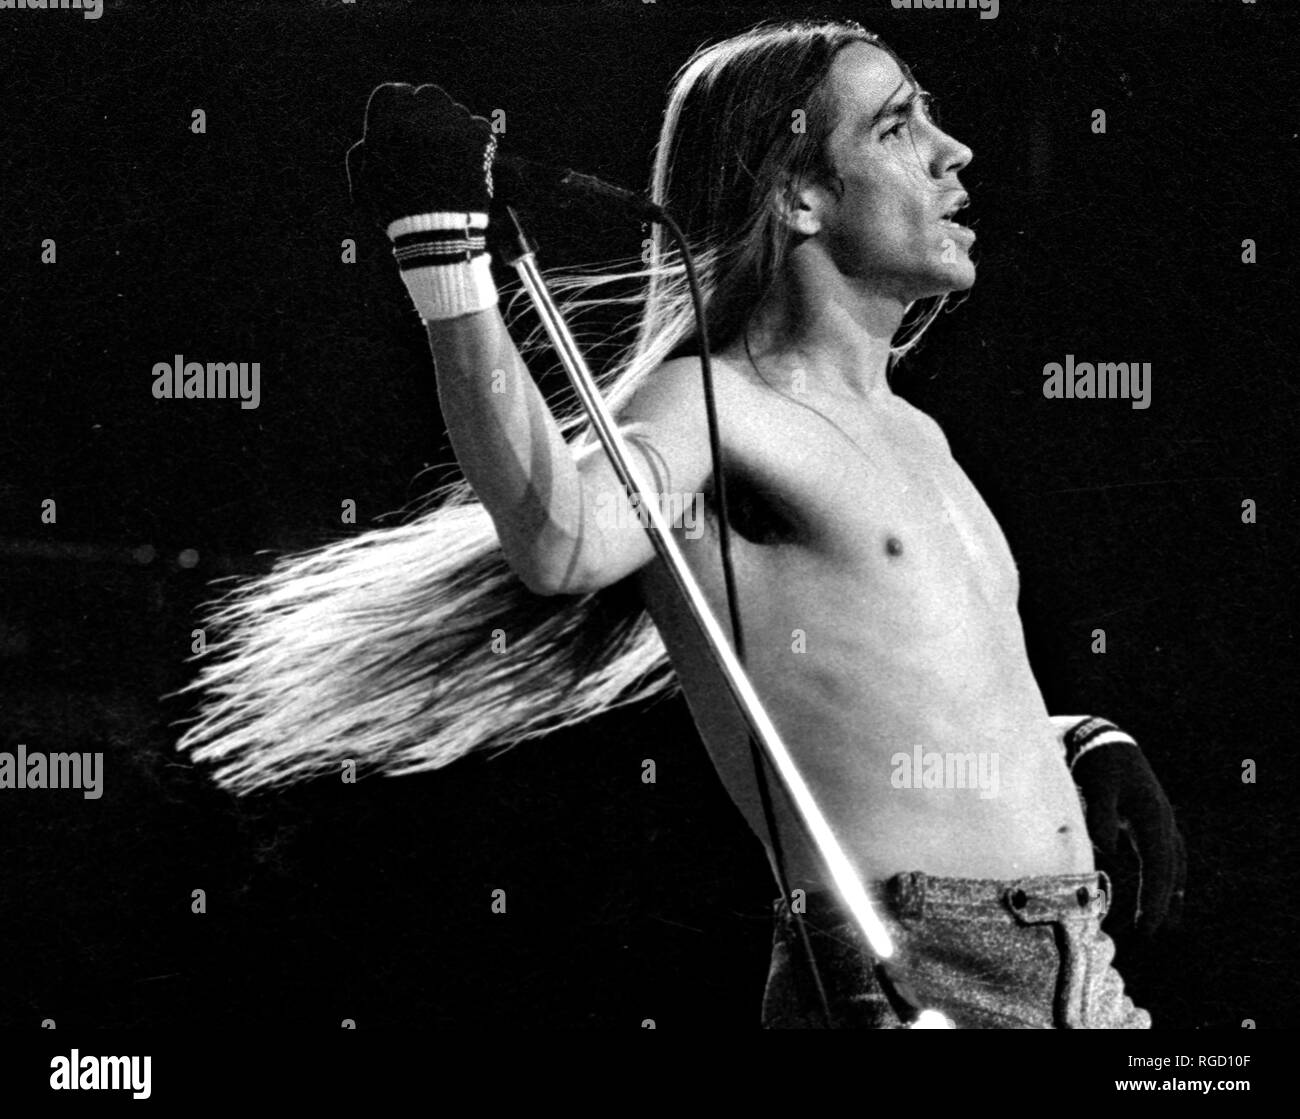 Red Hot Chili Peppers Anthony Kiedis in Concert am großen Holz in Mansfield Ma, USA 1992 Foto von Bill Belknap Stockfoto